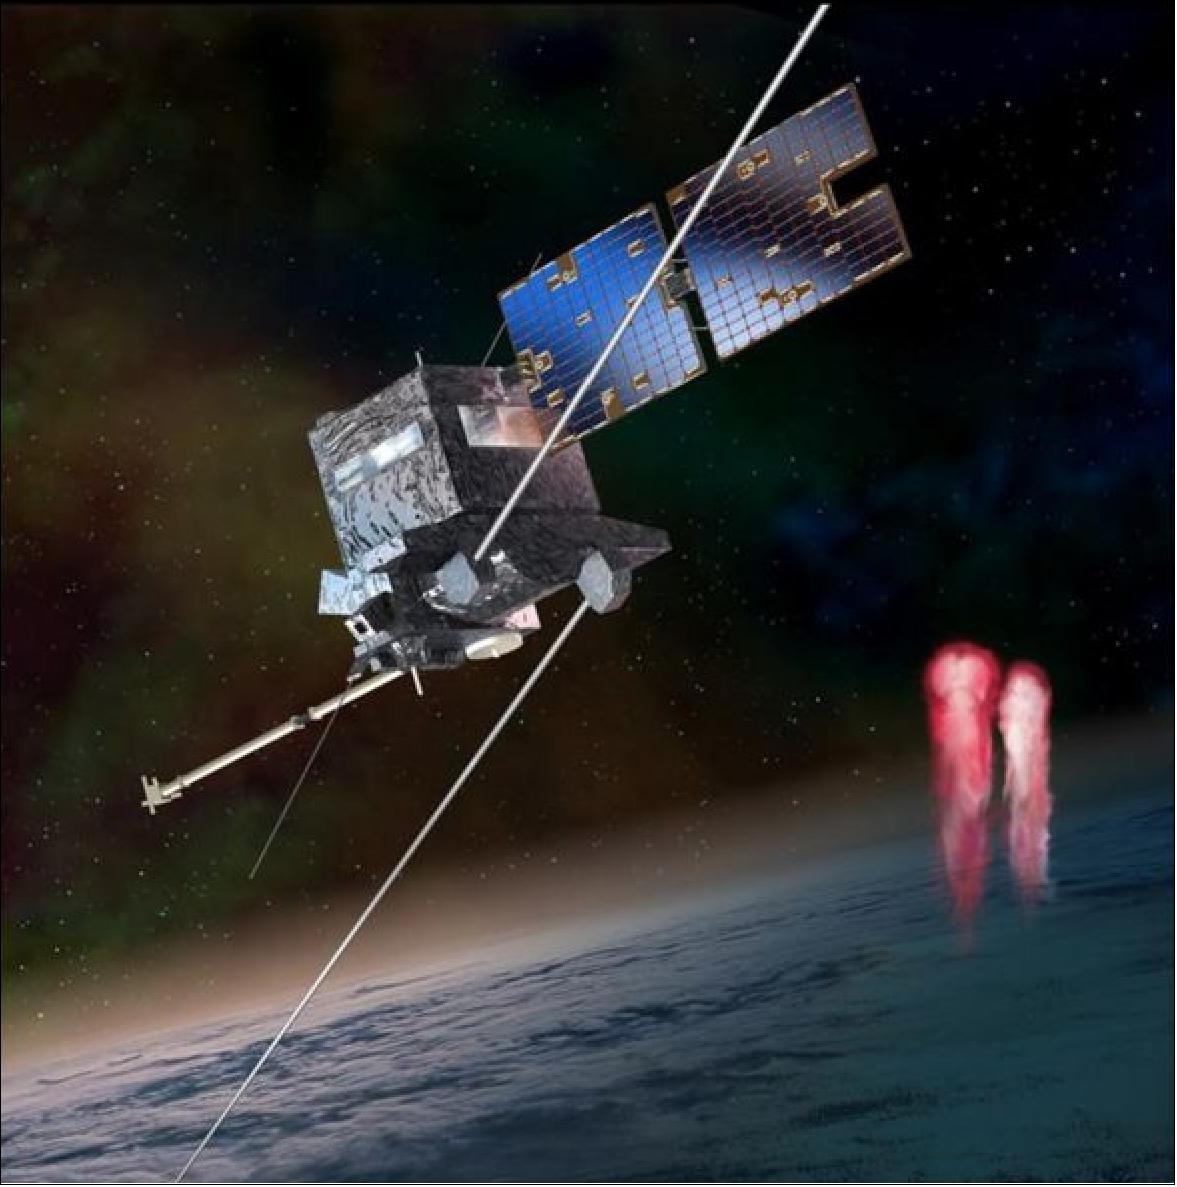 Figure 4: Artist's view of the TARANIS spacecraft (image credit: CNES)